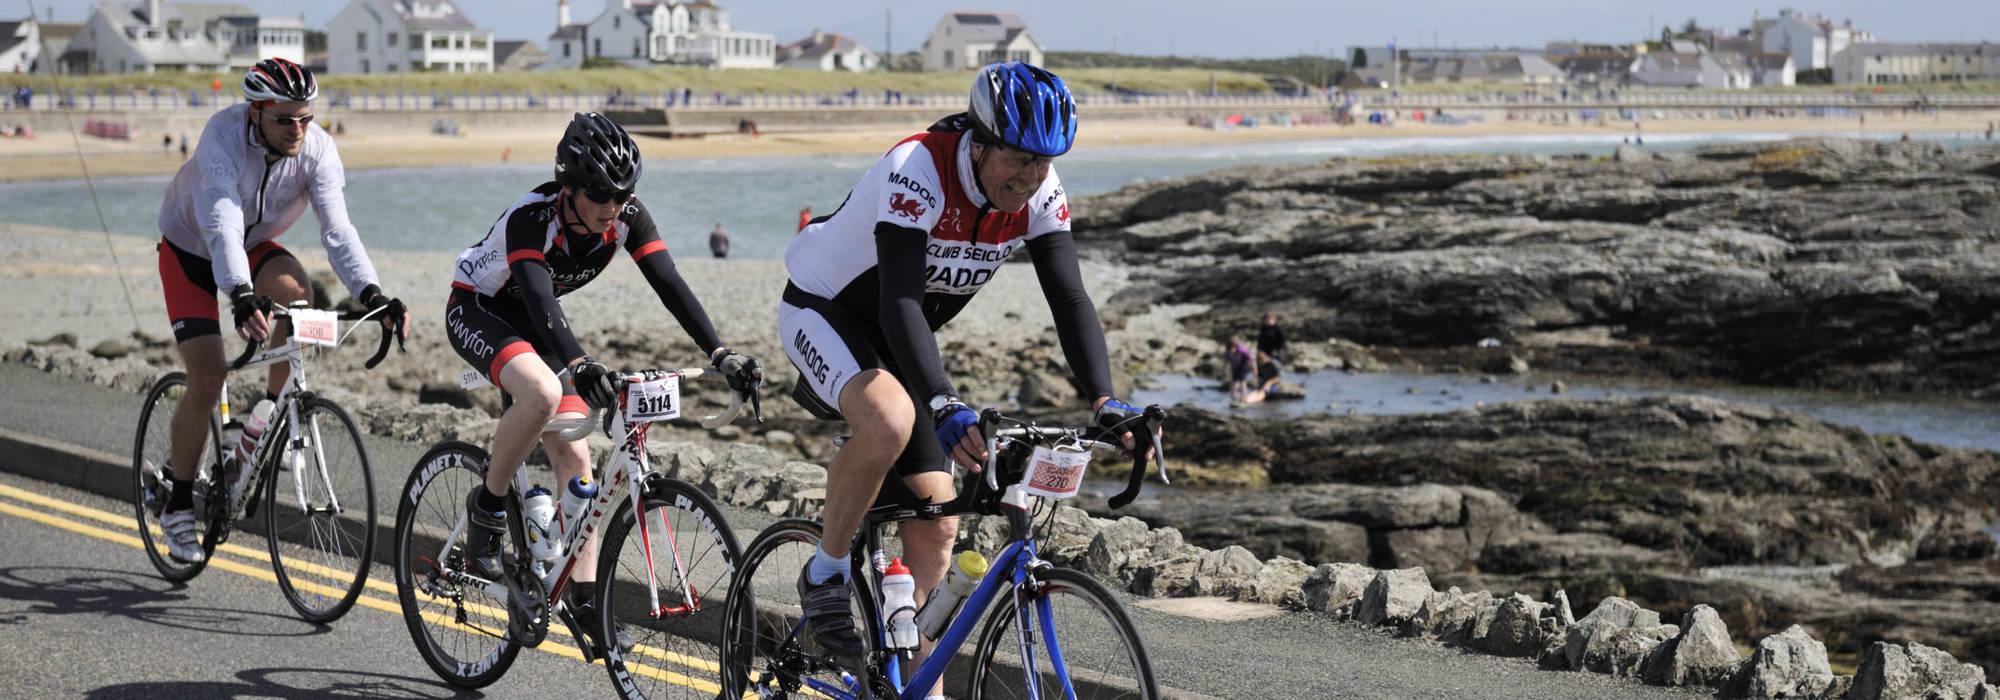 Tour de Mon riders in Trearddur Bay, Anglesey